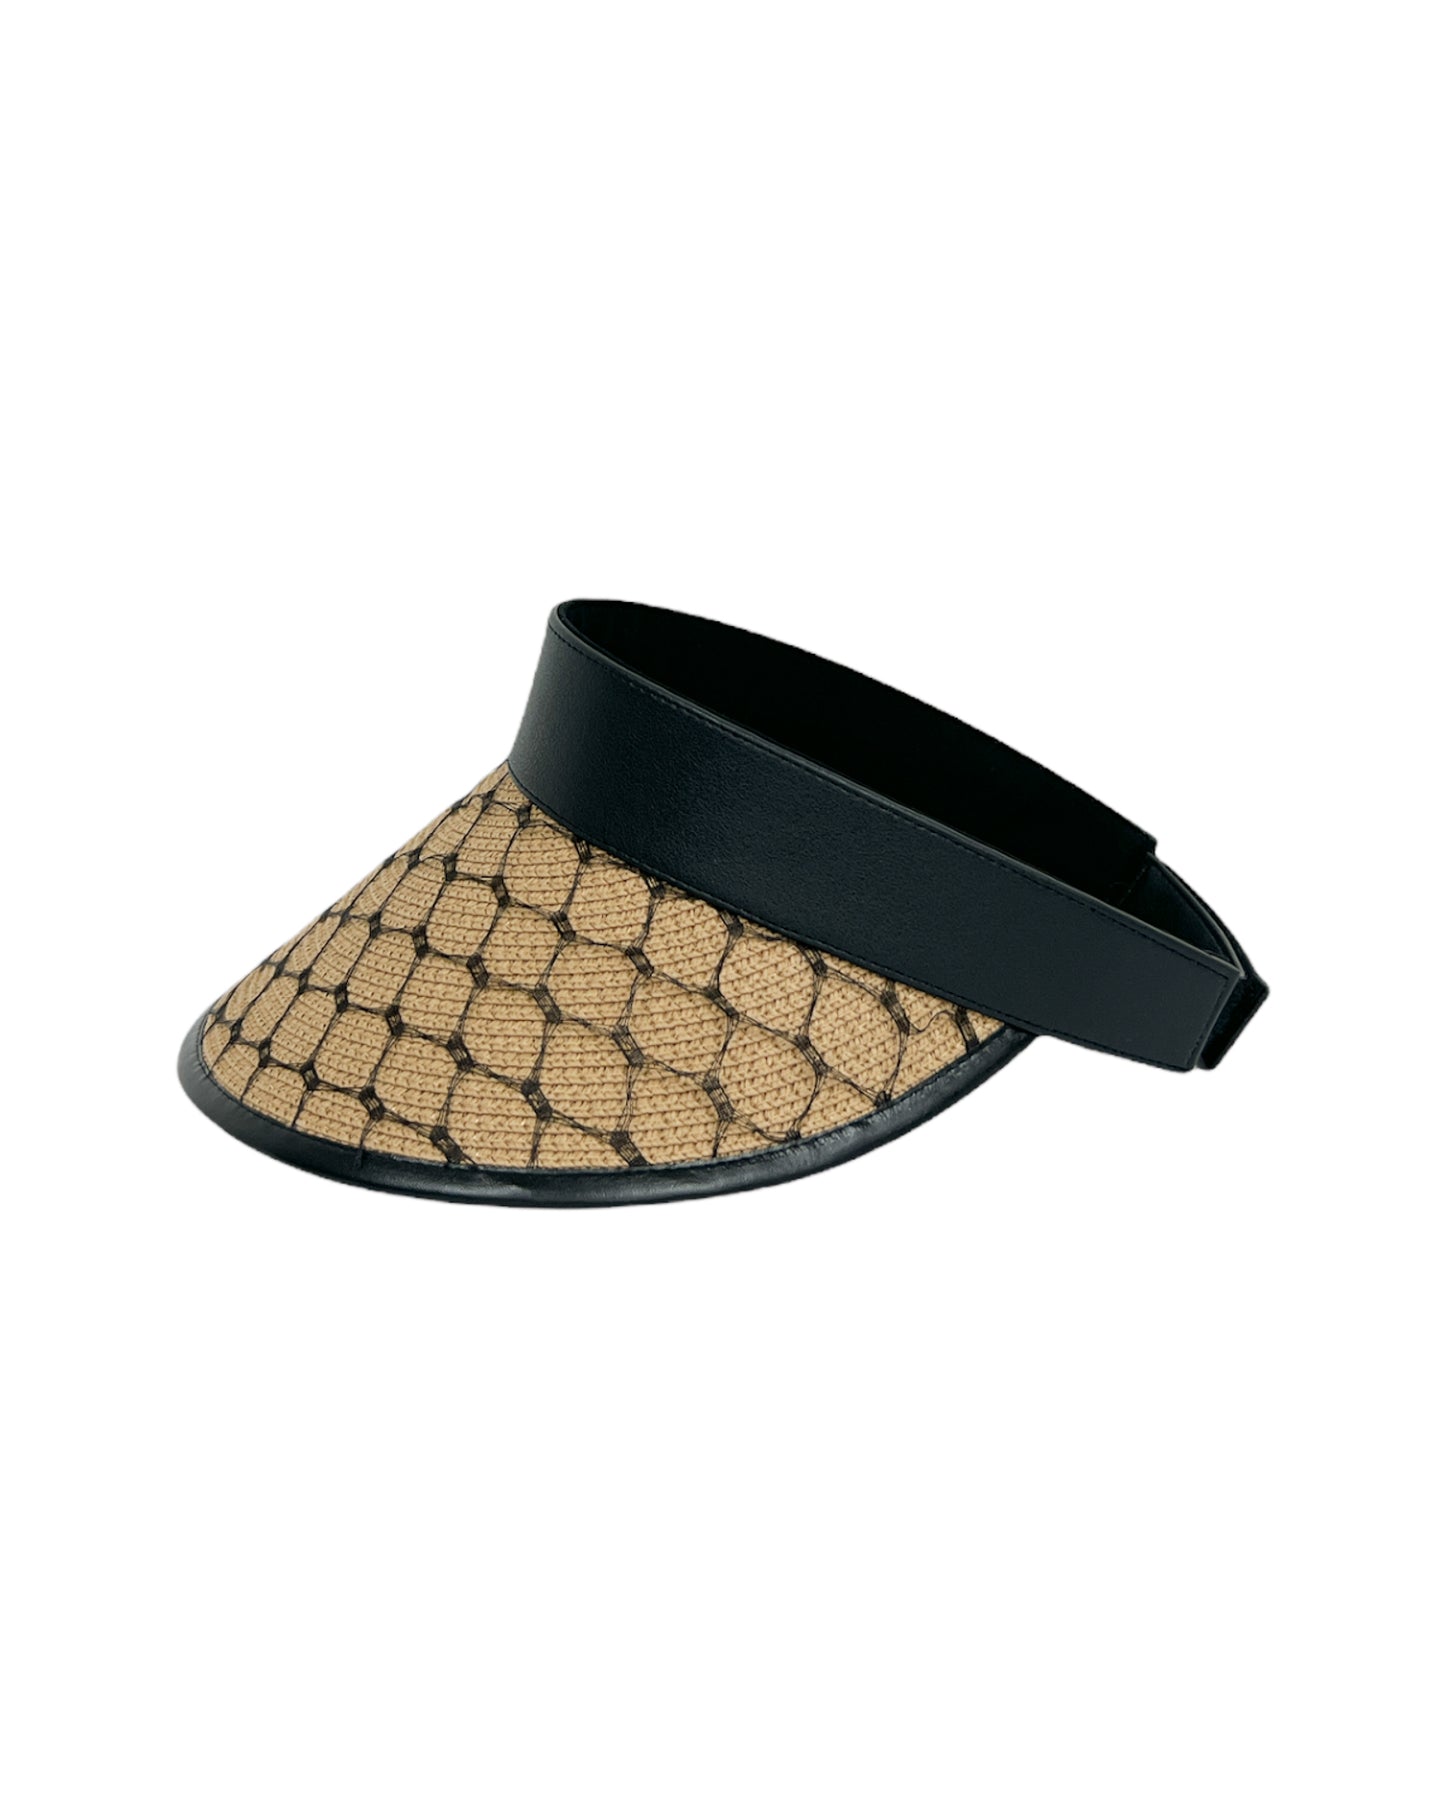 beige straw w/ lace & PU leather trim visor hat *pre-order*